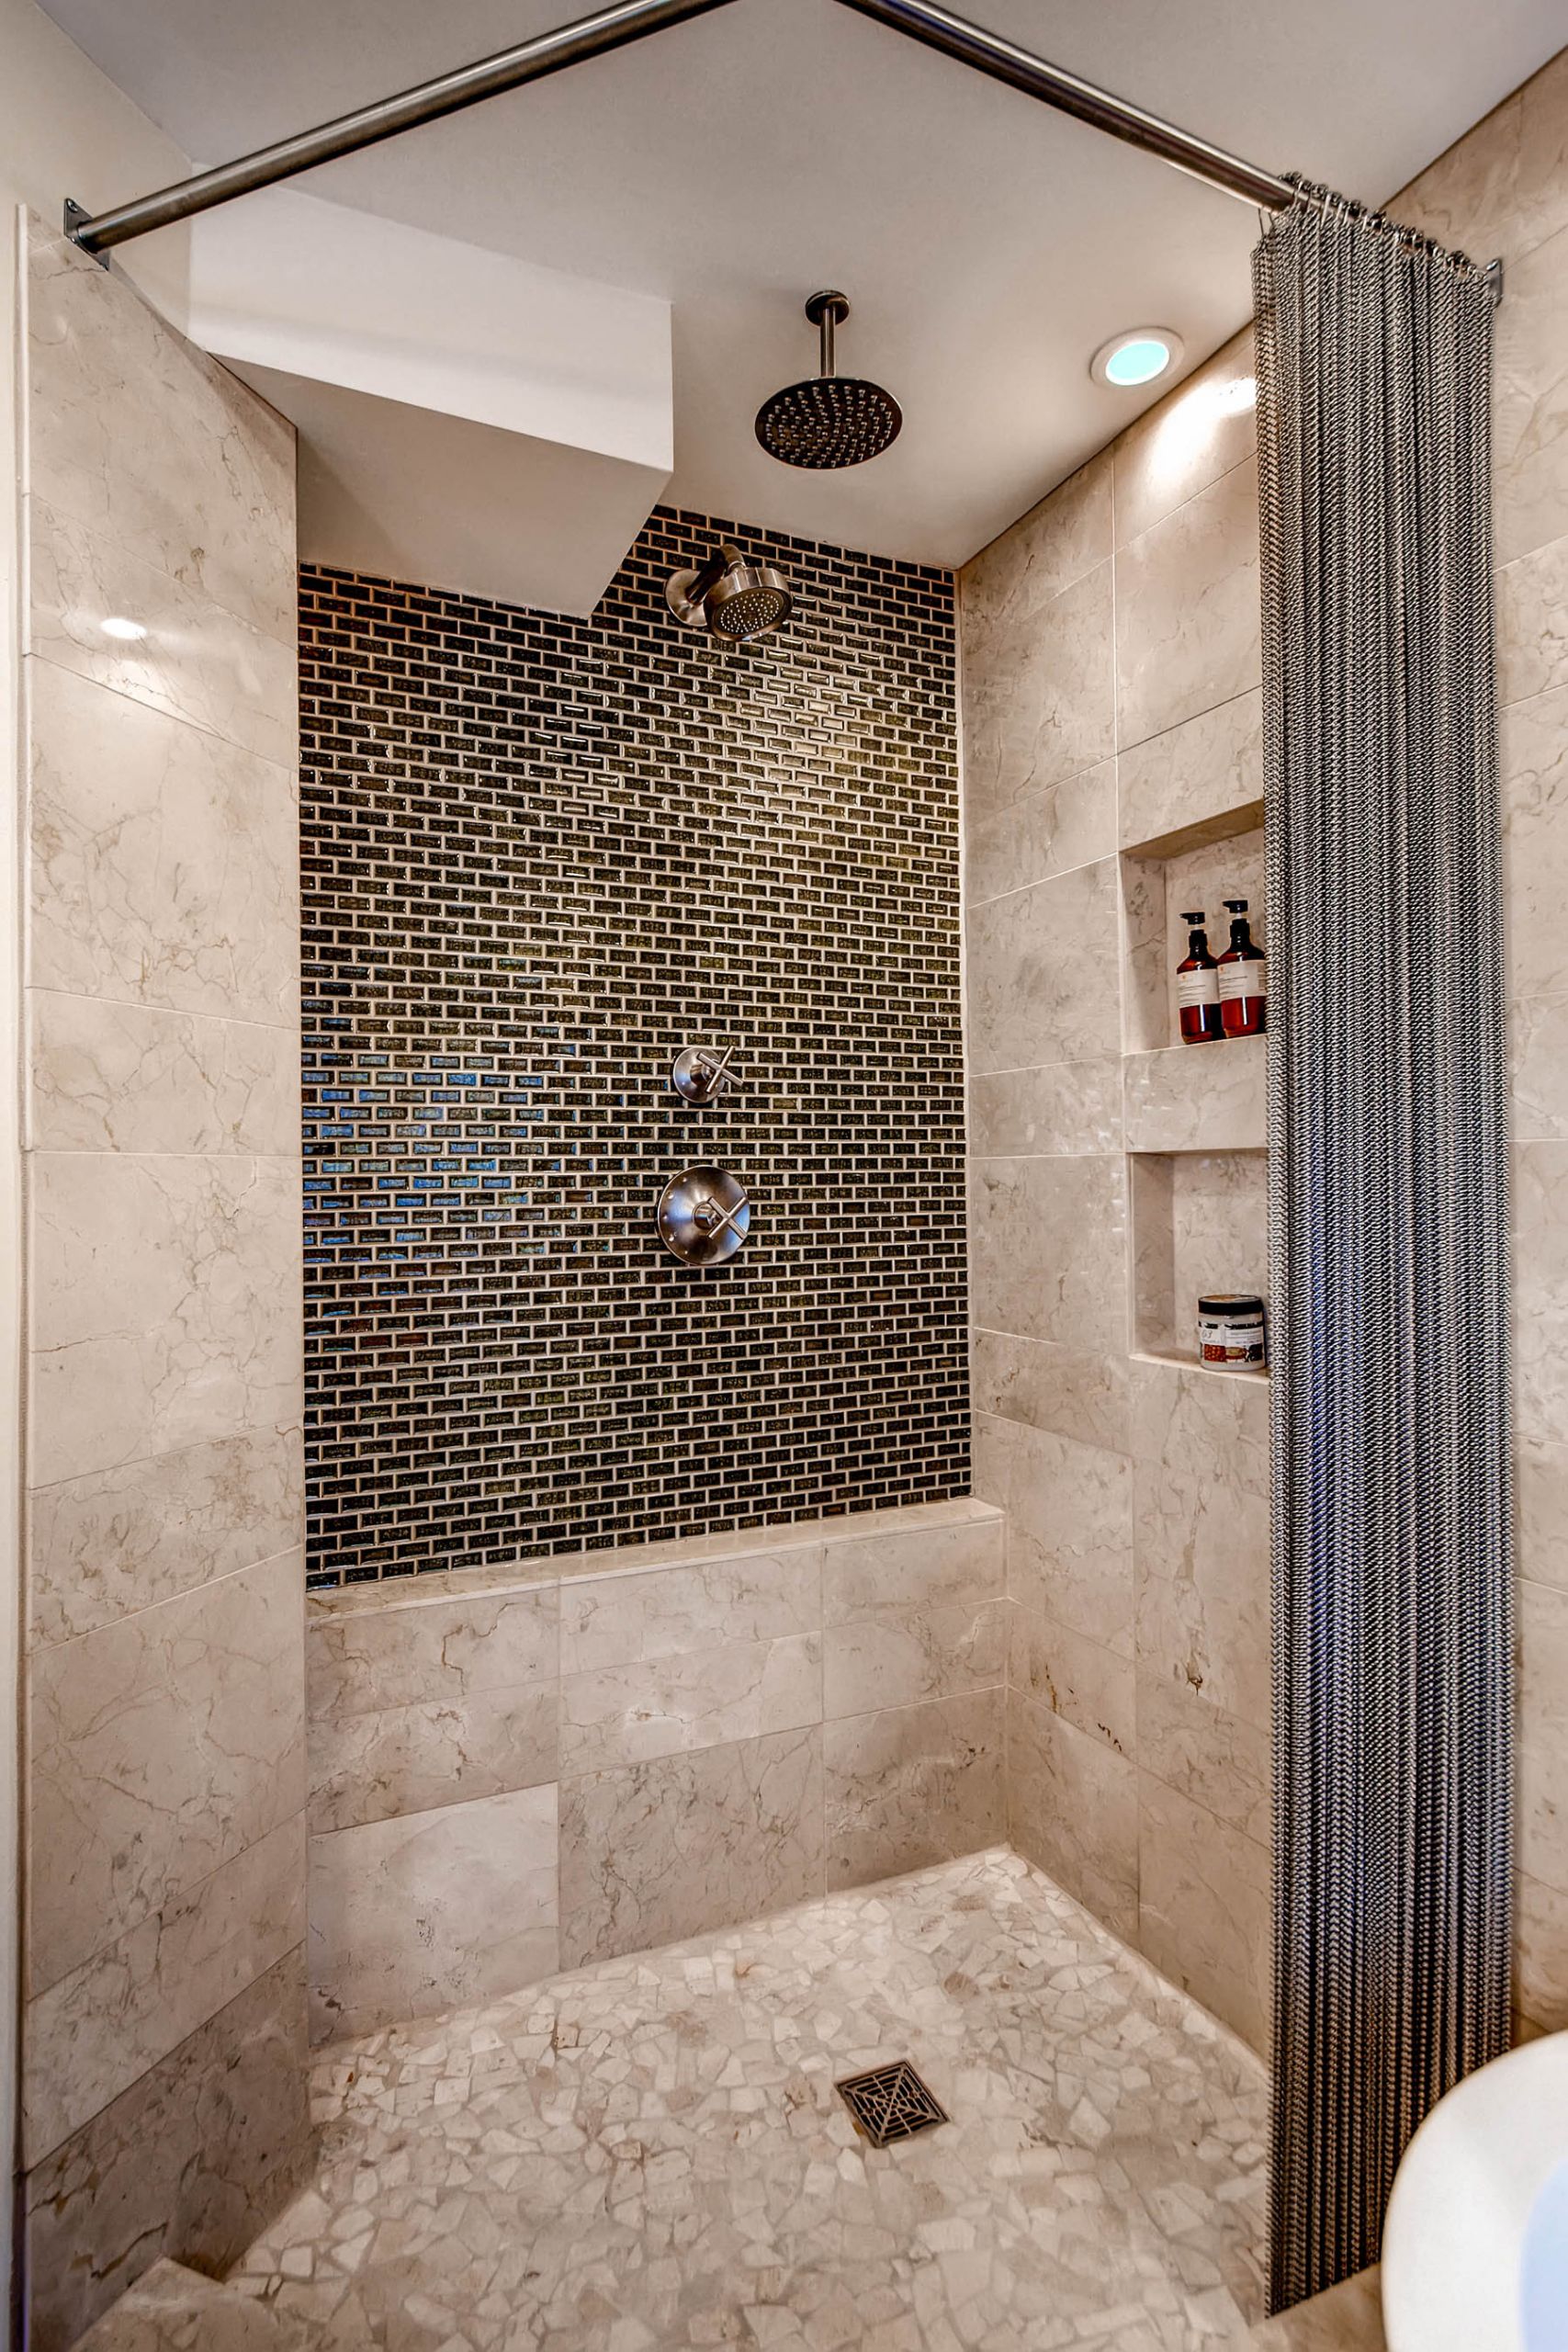 Diy Bathroom Wall Tile
 Spa Like Master Bathroom Remodel